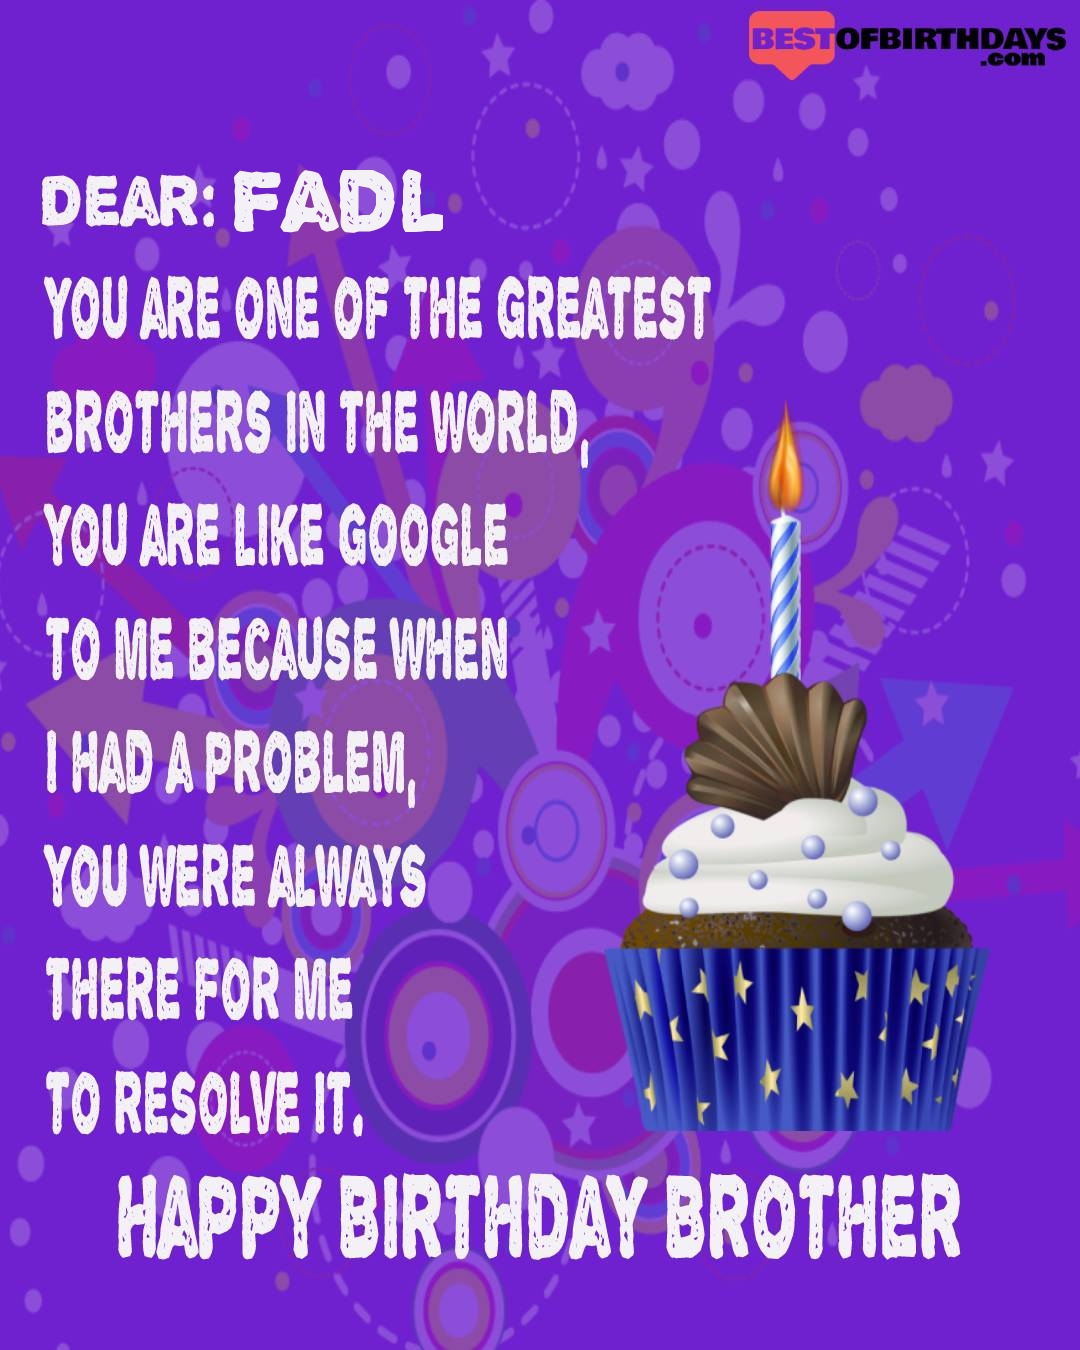 Happy birthday fadl bhai brother bro